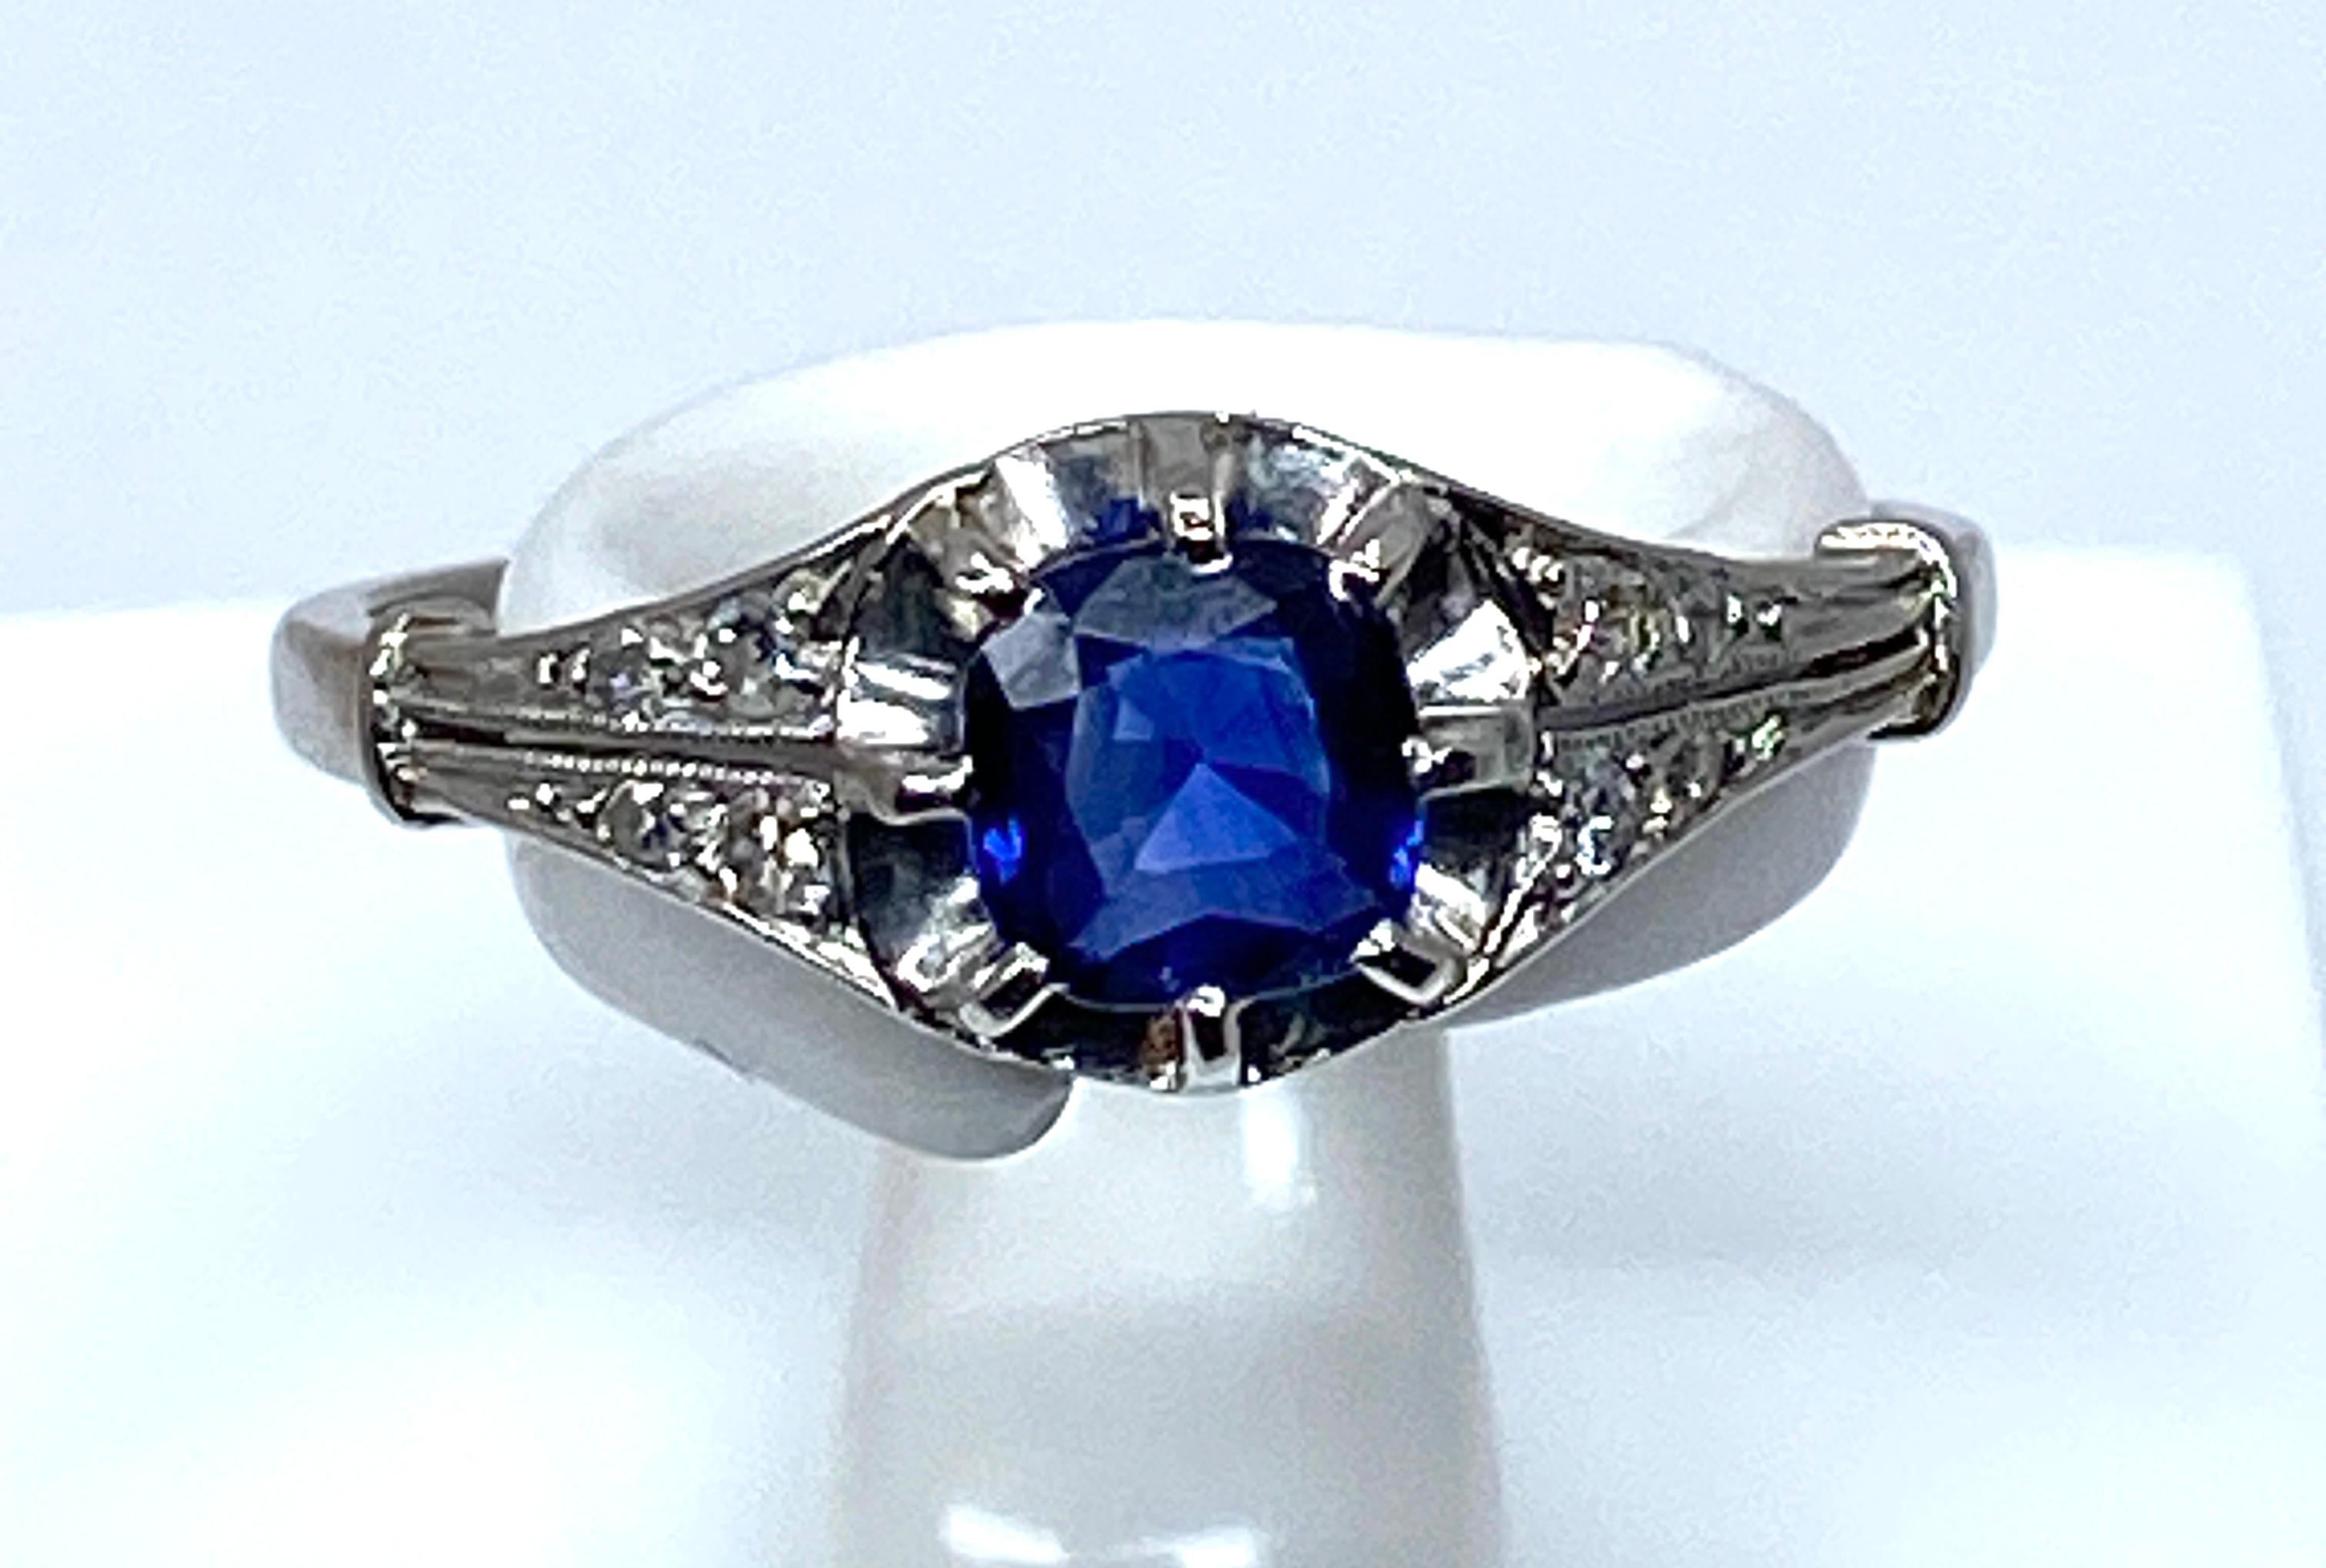 Art Nouveau Platinium ring set with a sapphire and diamonds, circa 1900